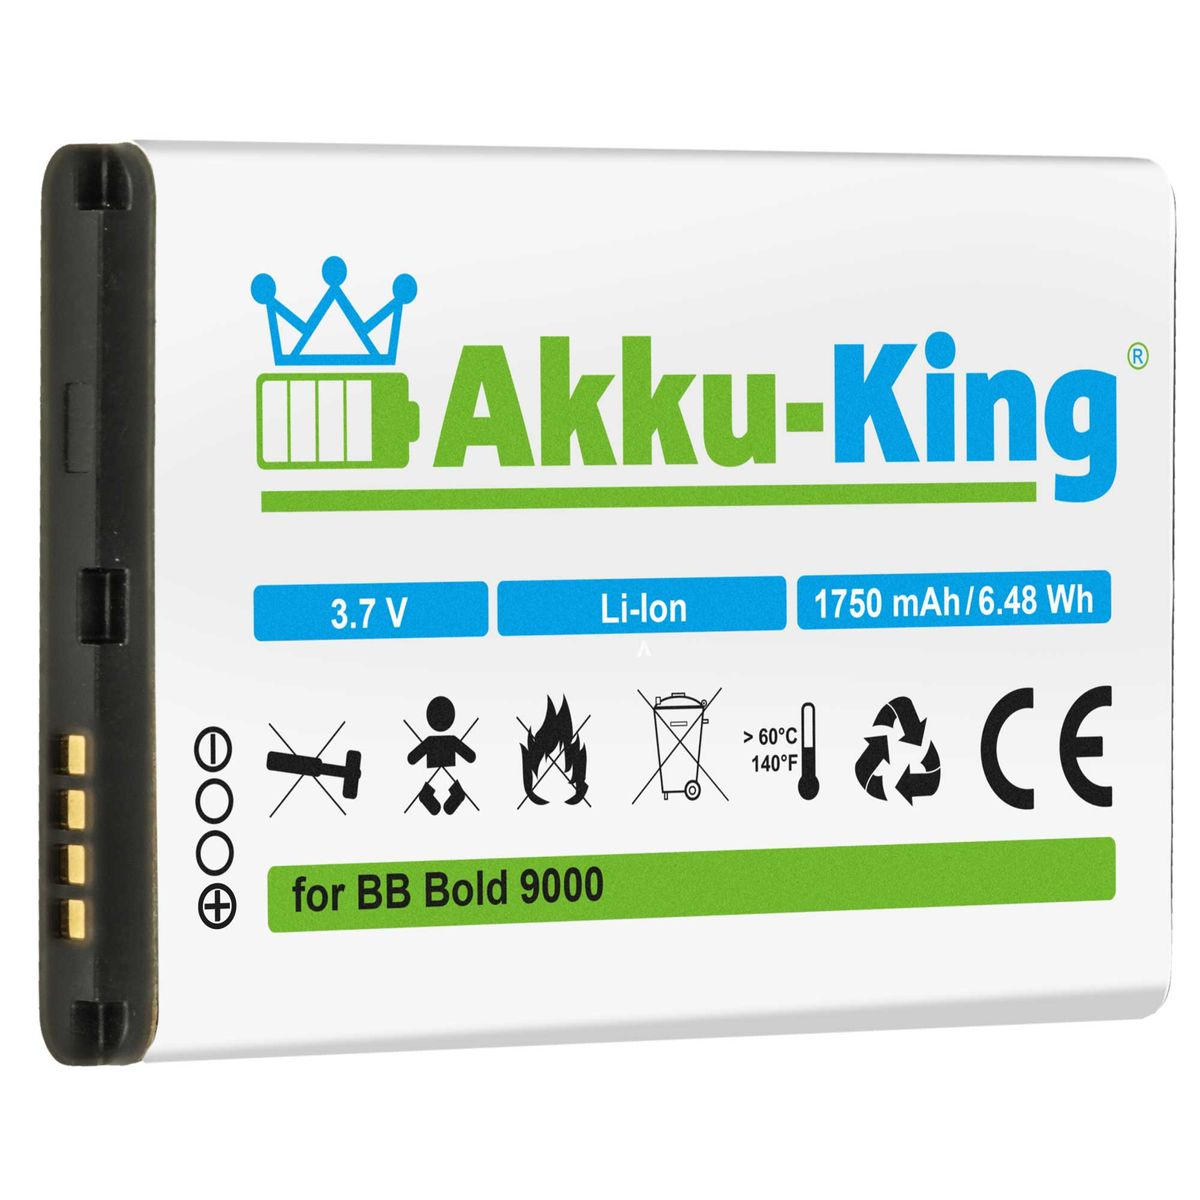 AKKU-KING Akku für Blackberry M-S1 Li-Ion Handy-Akku, Volt, 1700mAh 3.7